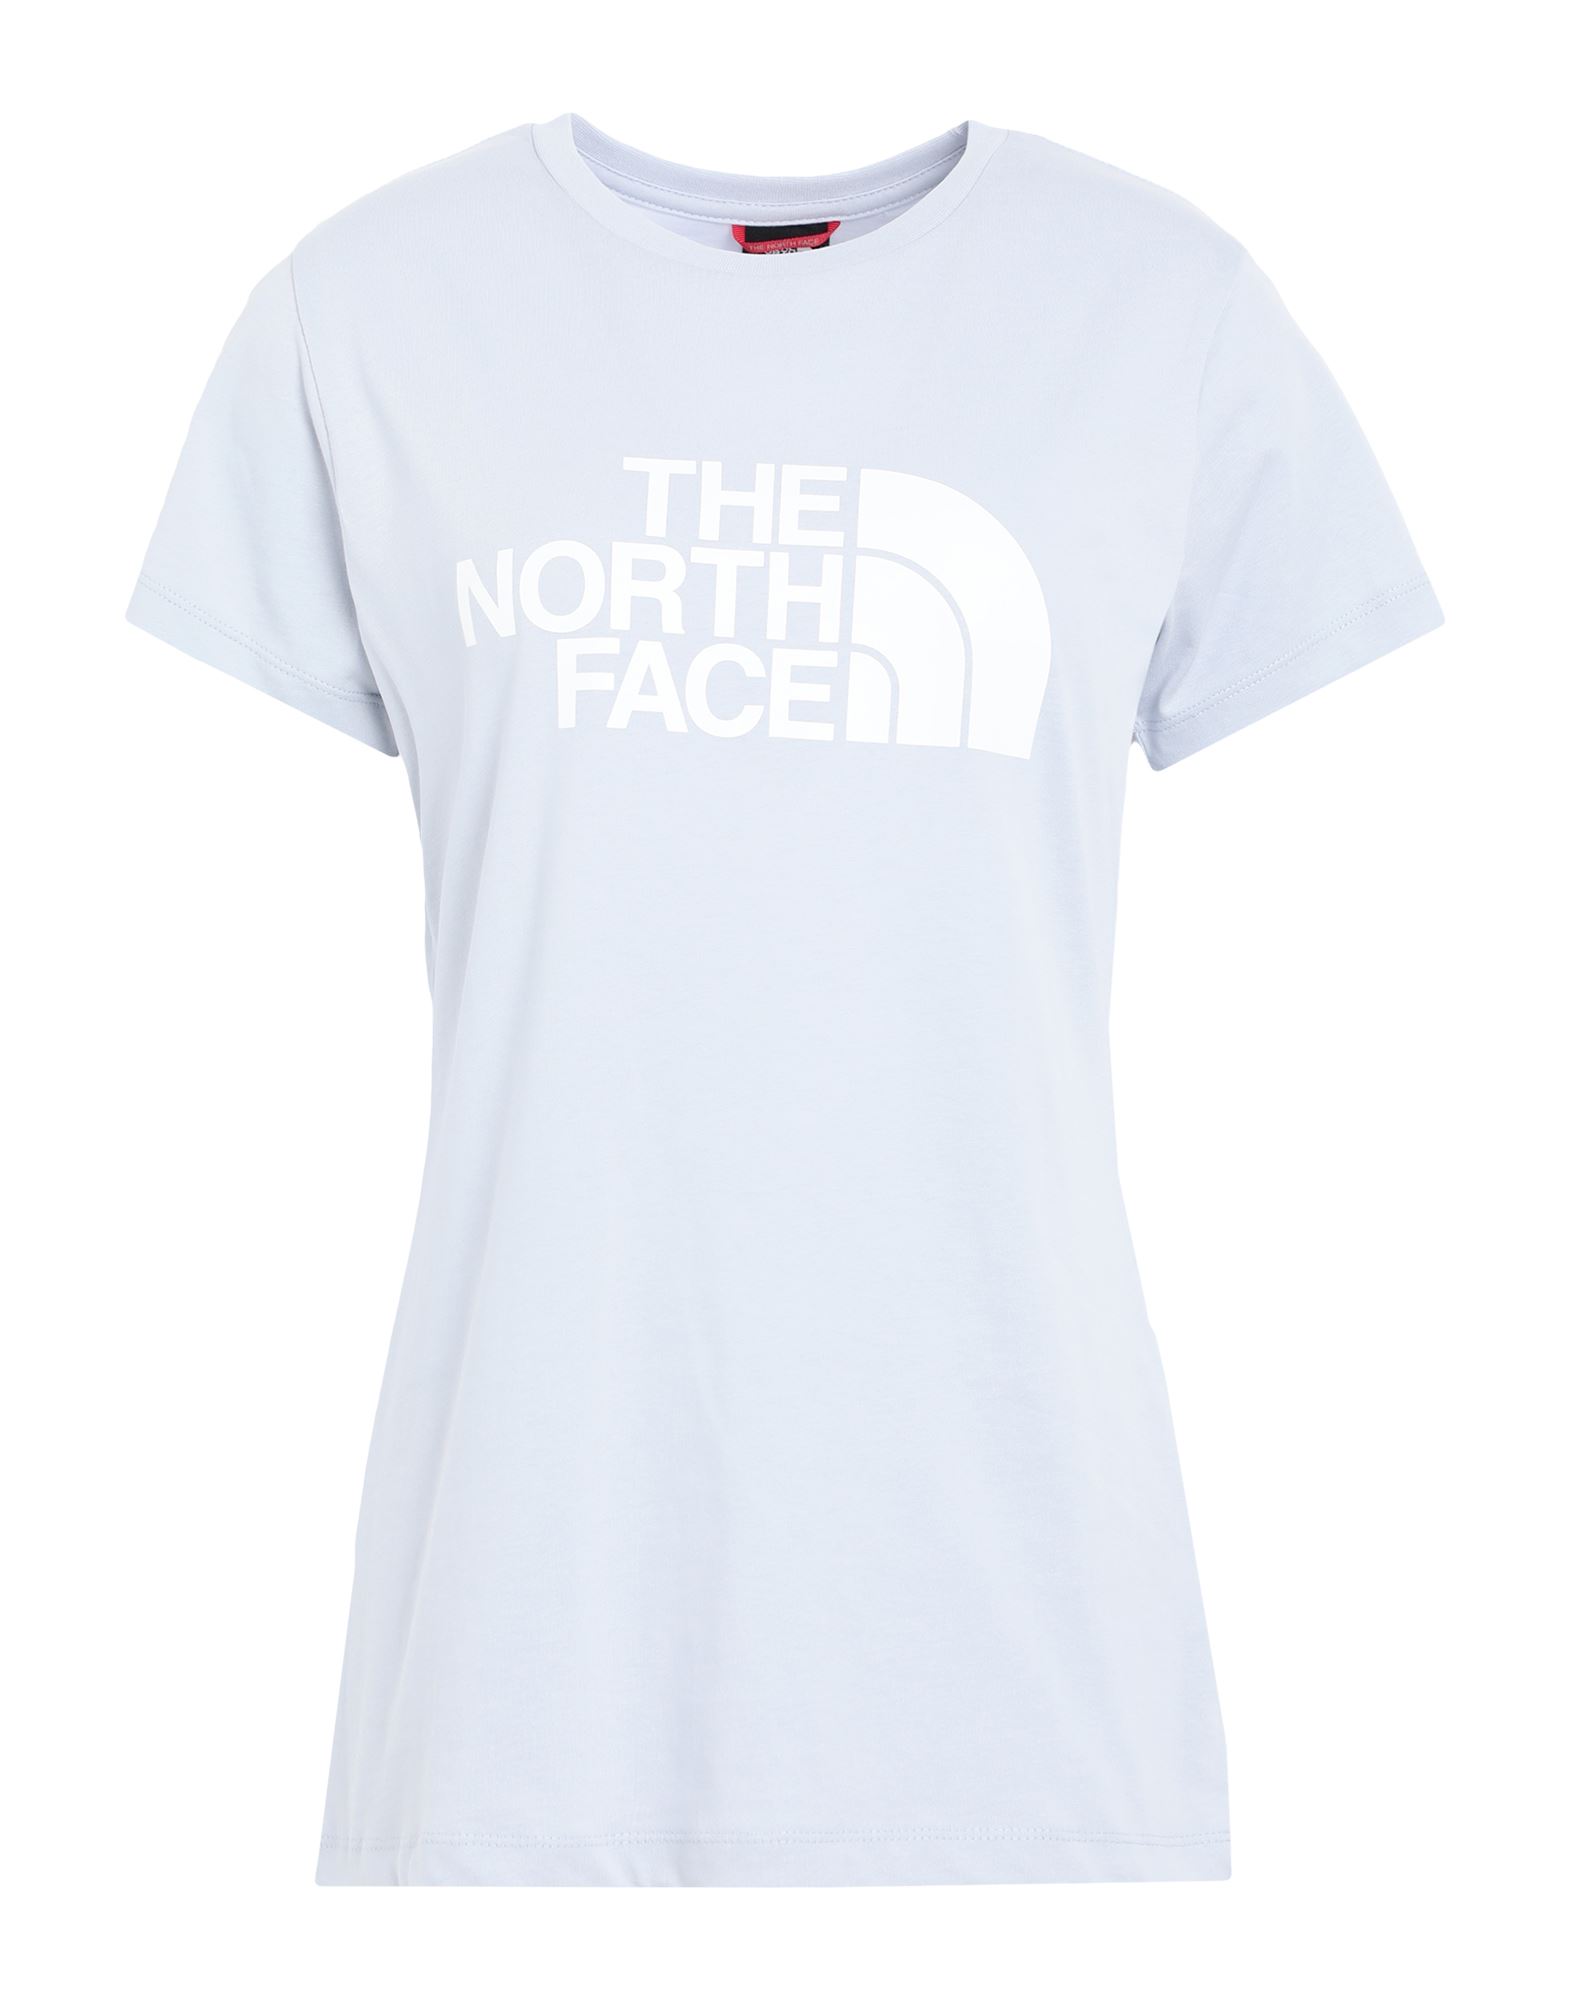 THE NORTH FACE T-shirts Damen Hellgrau von THE NORTH FACE